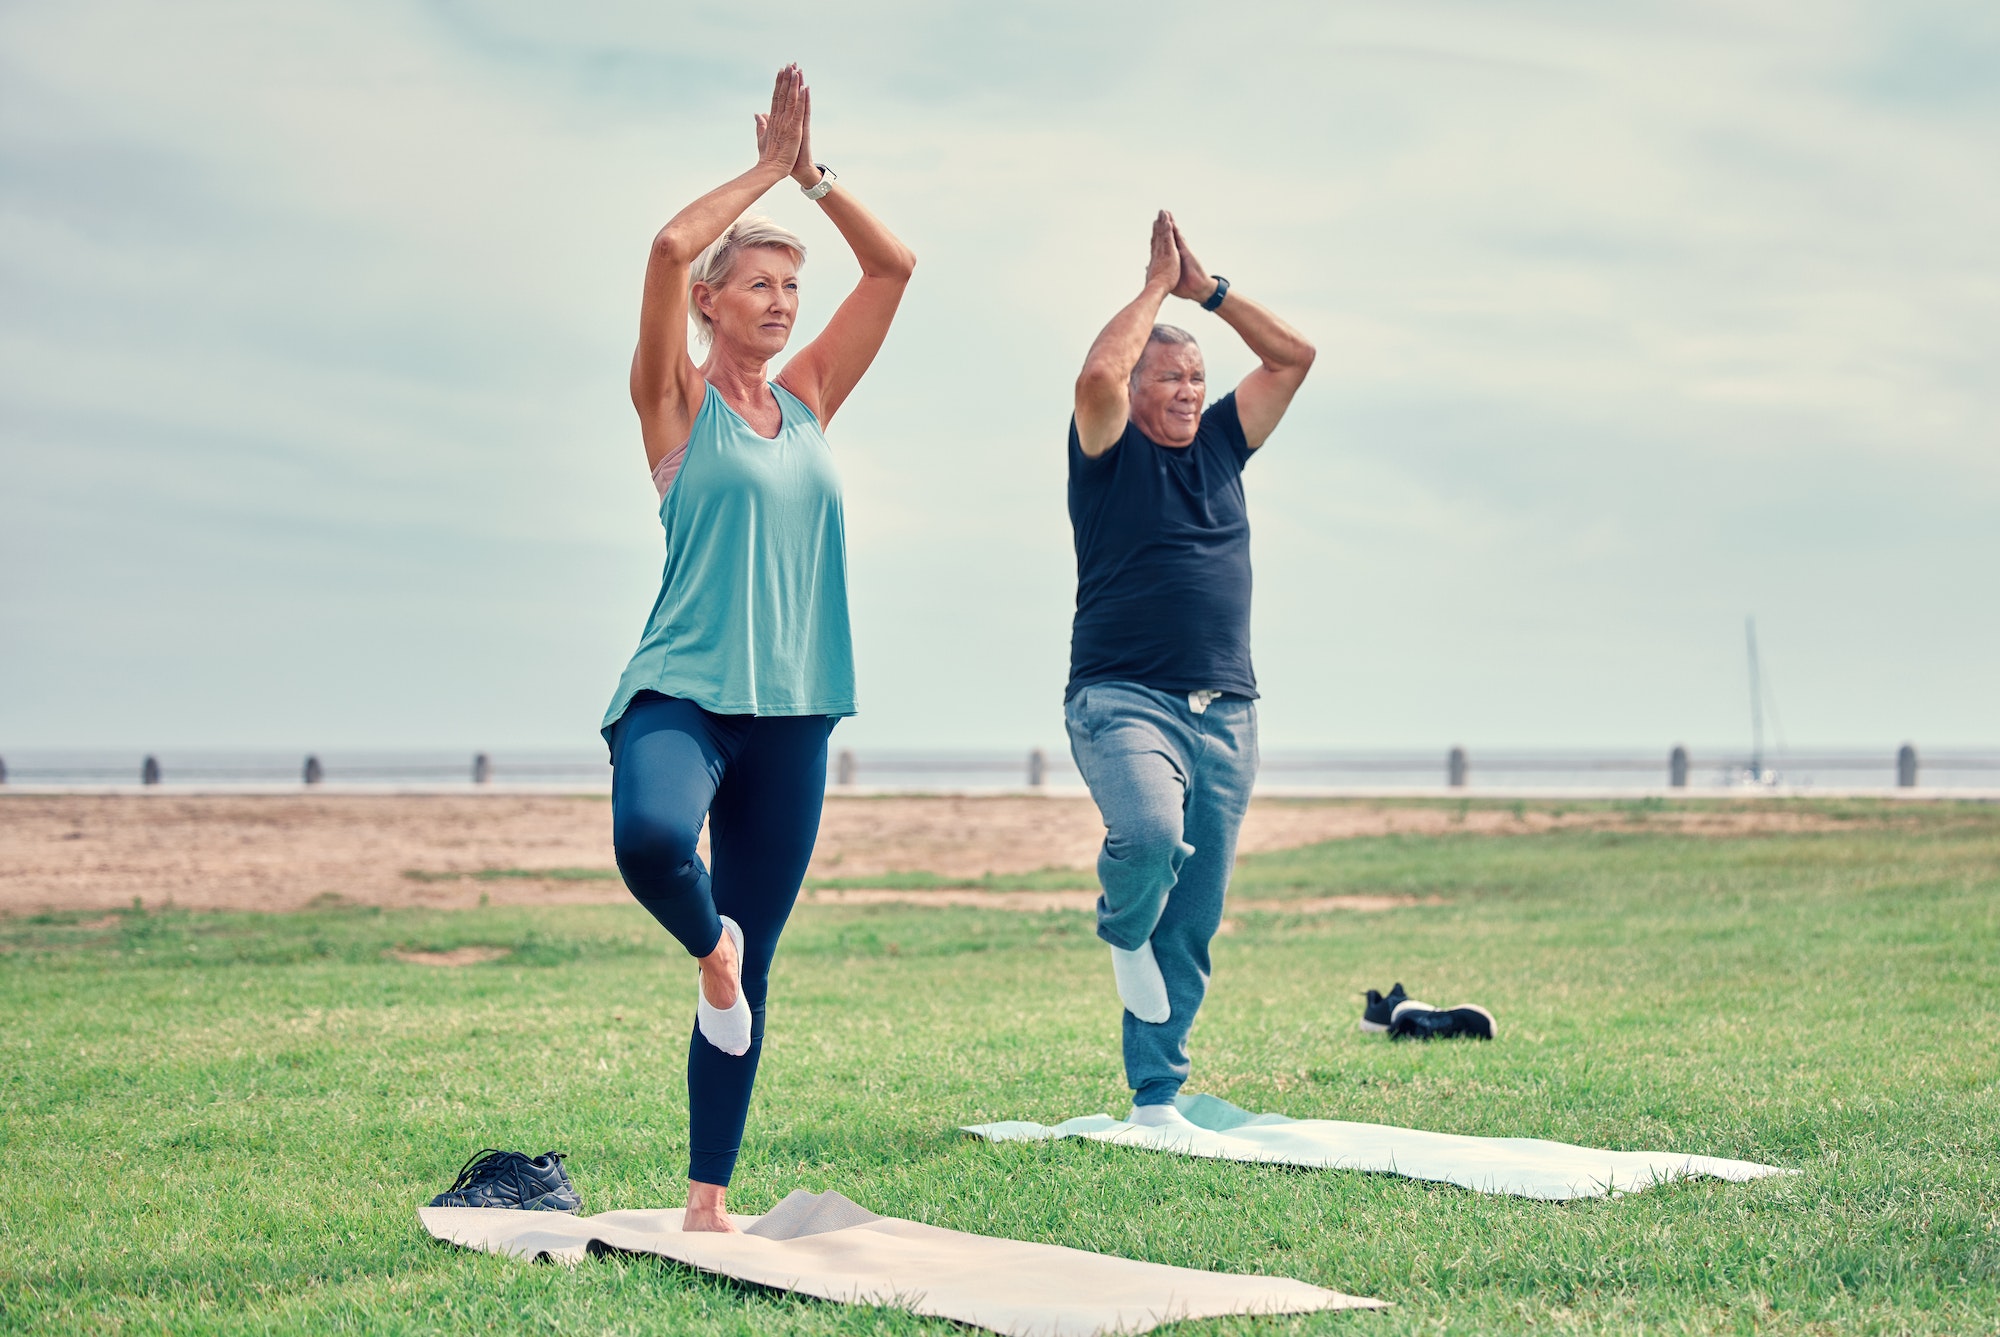 Yoga, fitness and senior couple wellness in park zen, holistic meditation or retirement health for